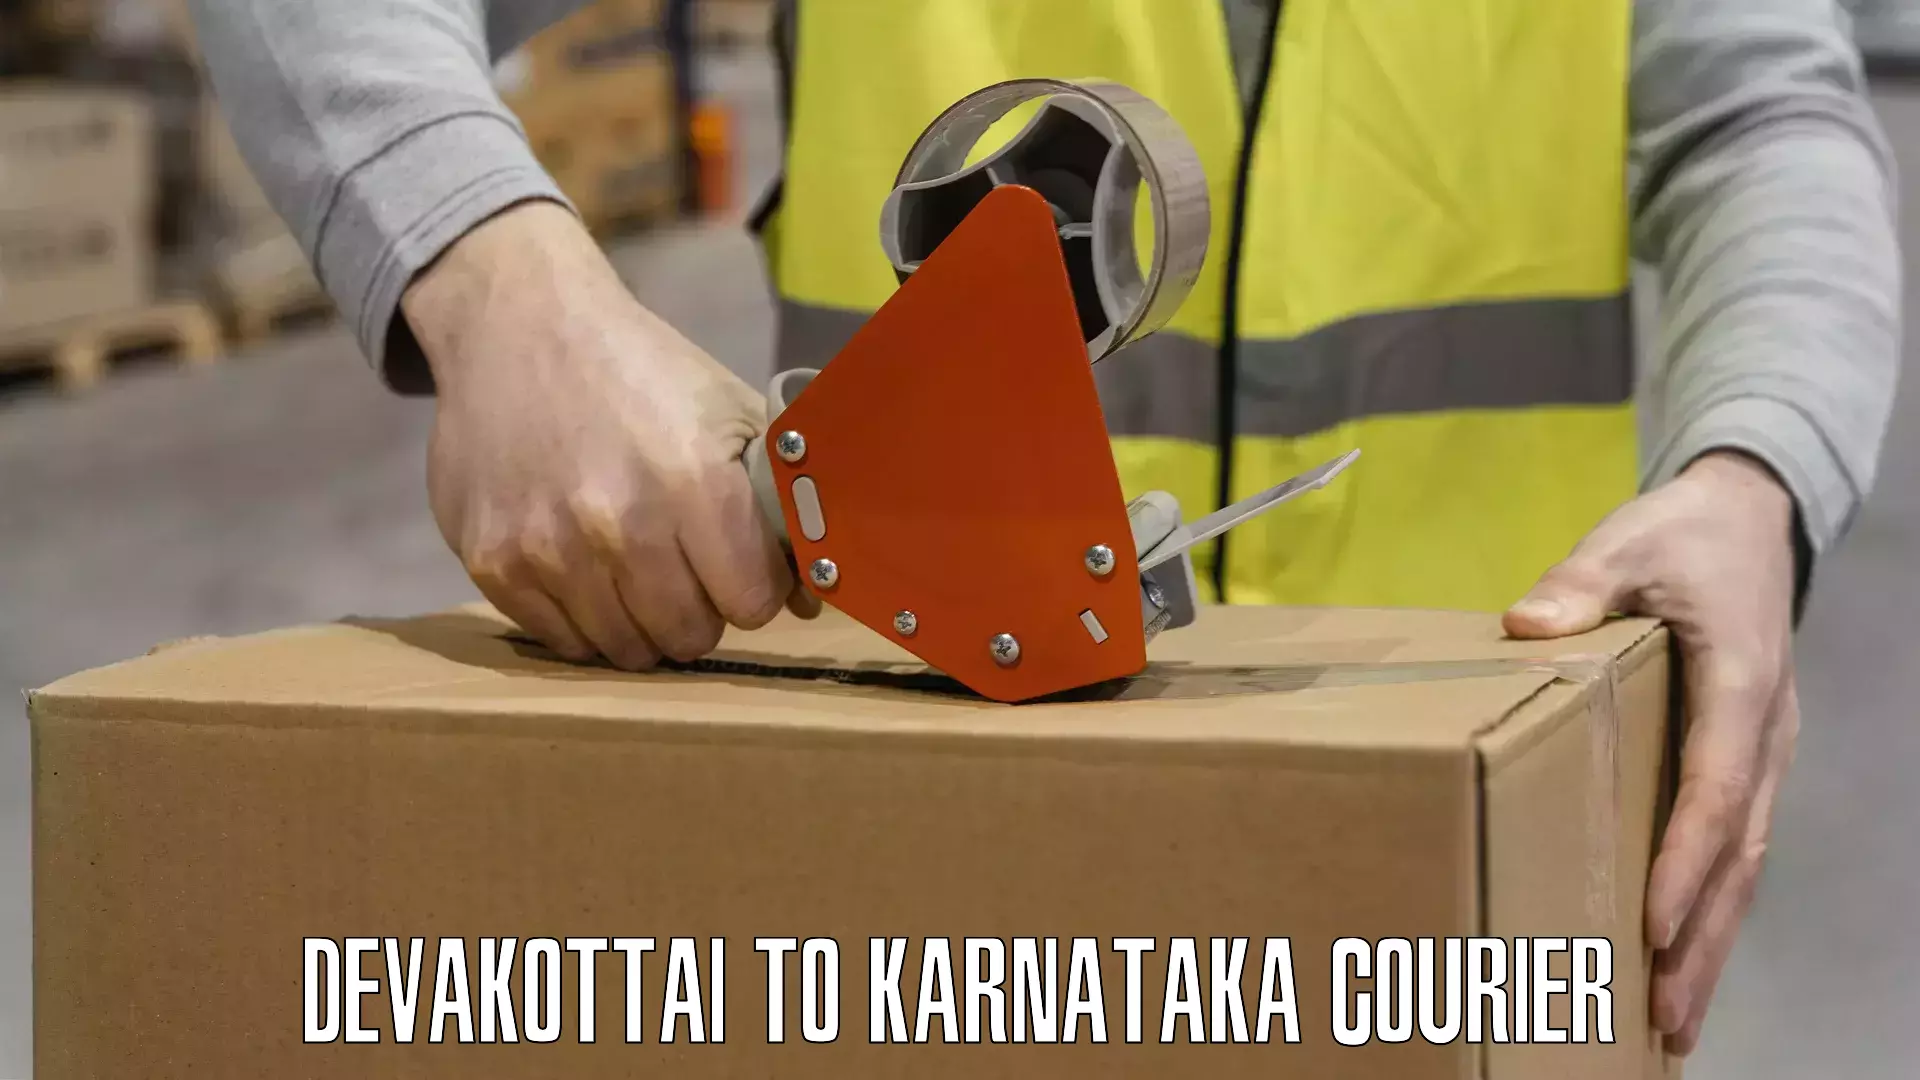 State-of-the-art courier technology Devakottai to Basavakalyan